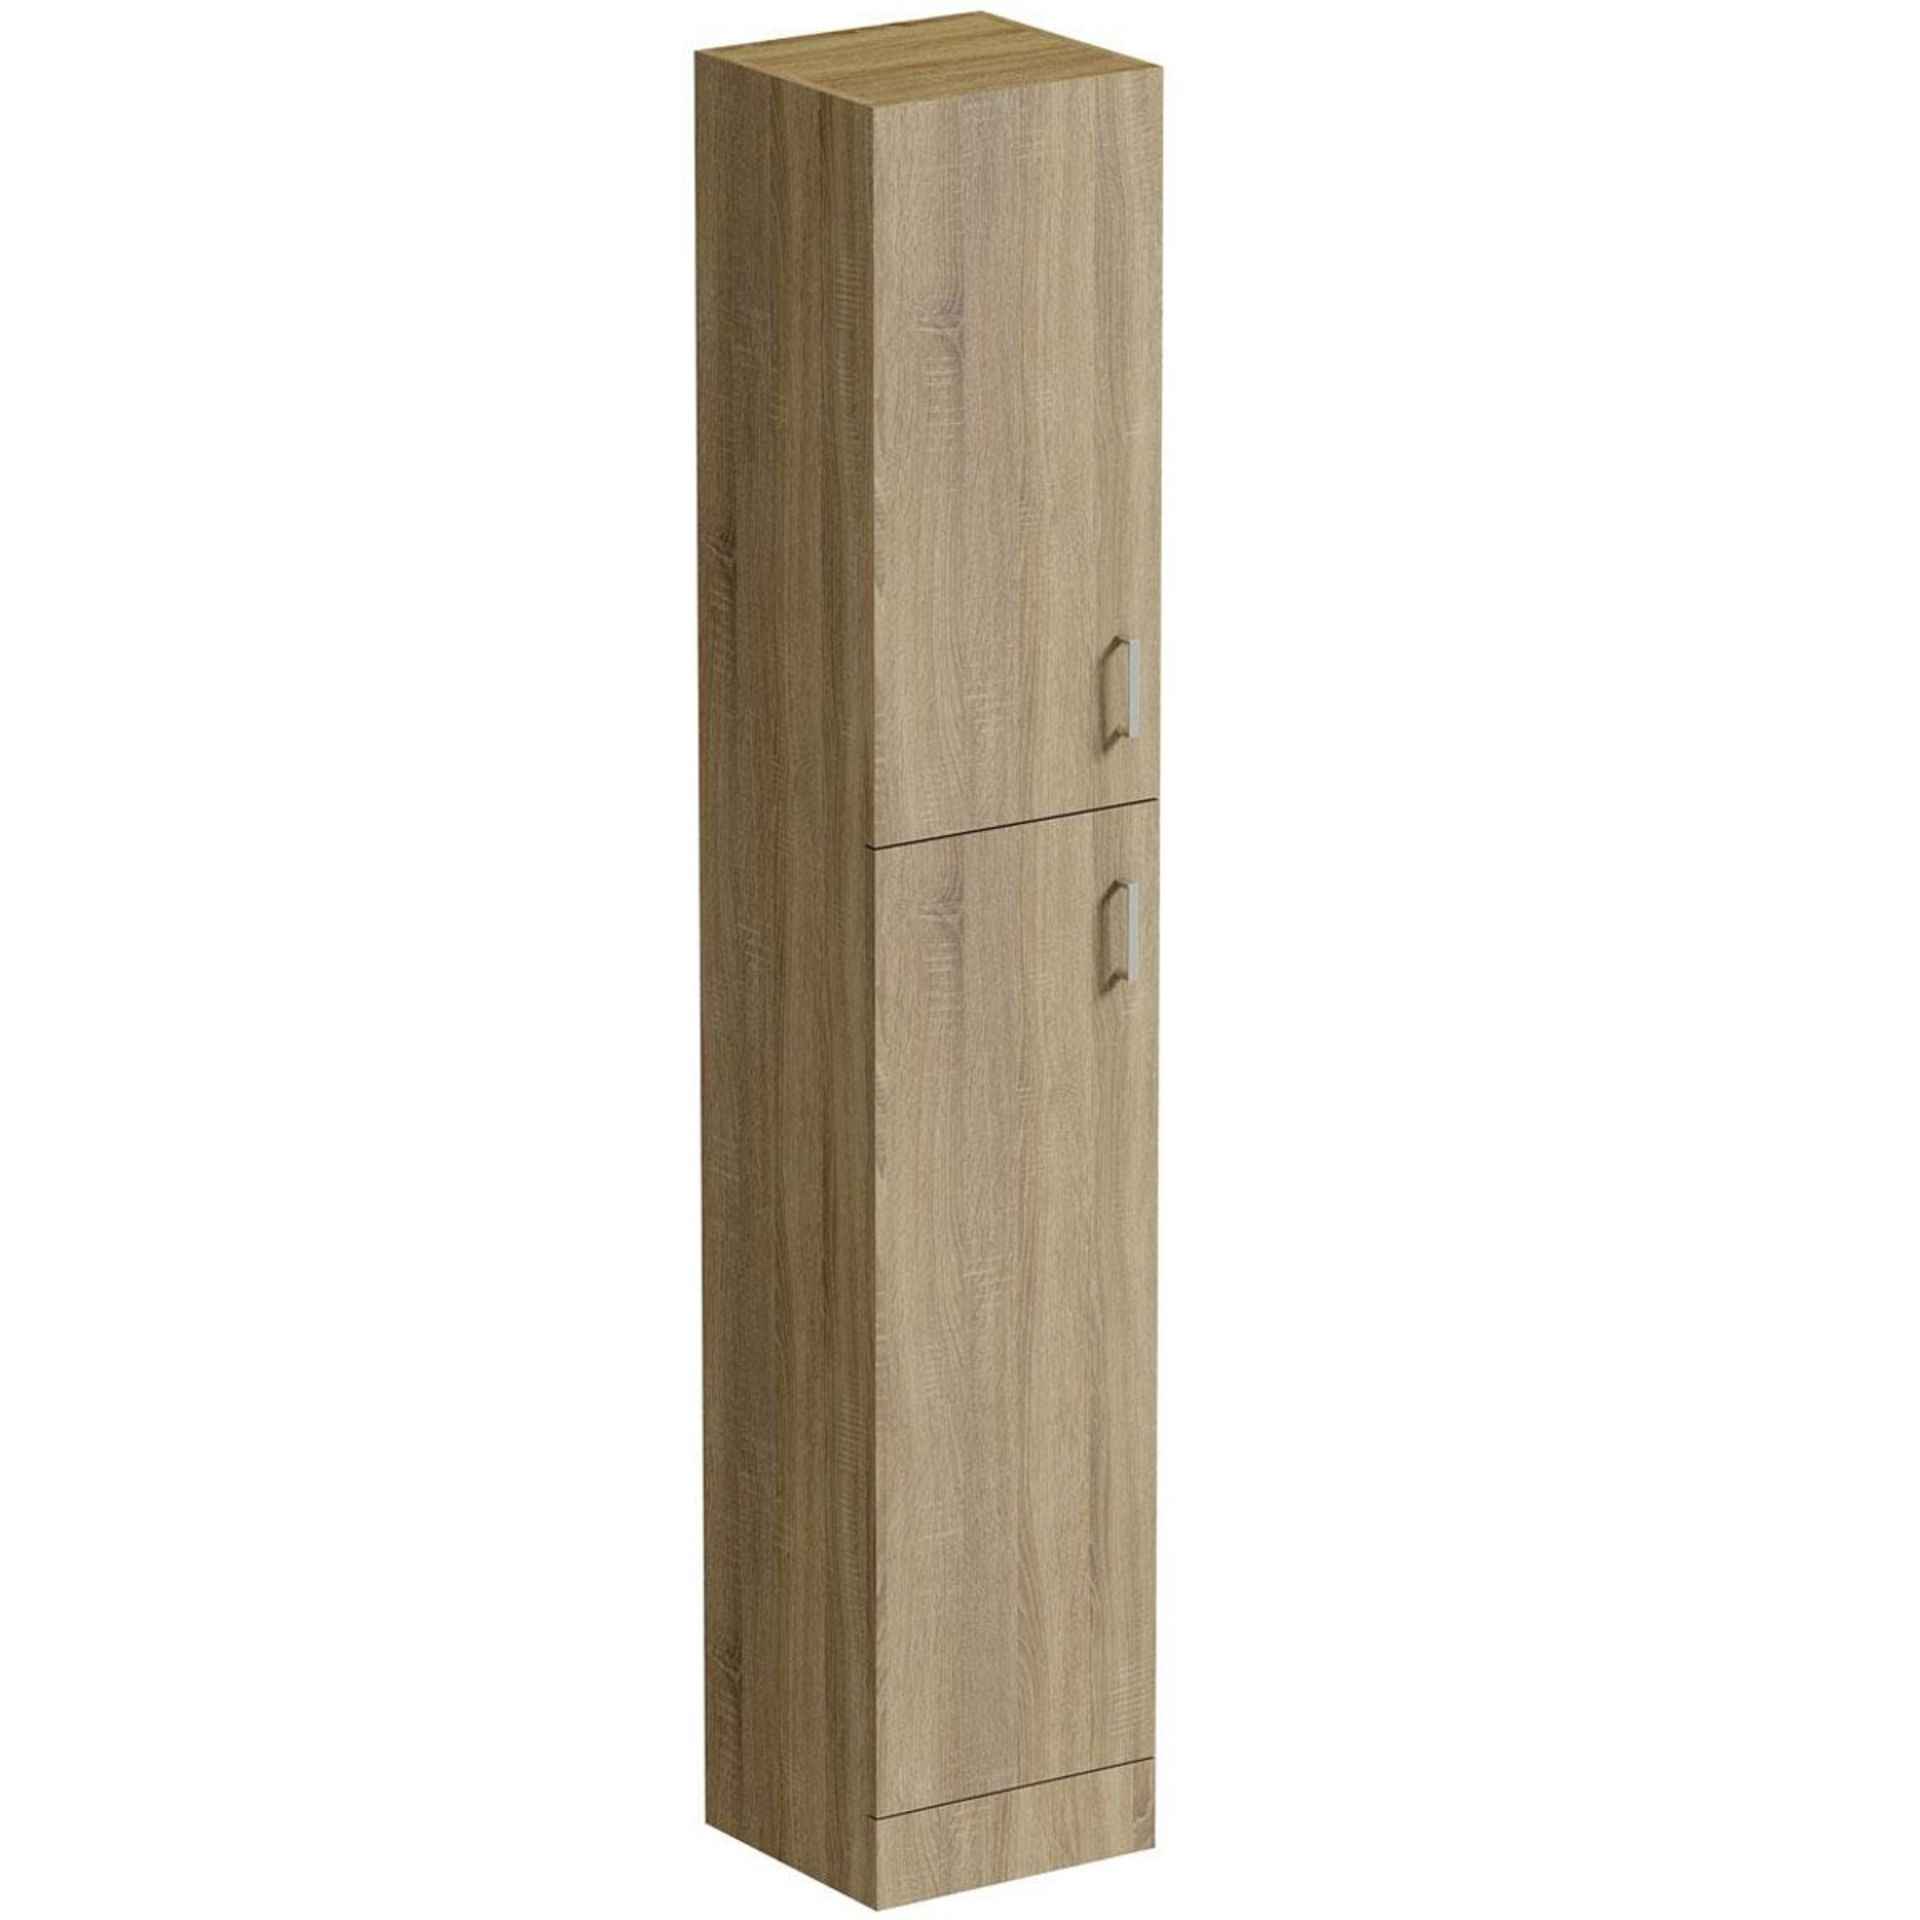 1 x Sienna Oak 300mm Tall Bathroom Storage Unit - Unused Stock - CL190 - Ref BR064 - Location: - Image 2 of 5